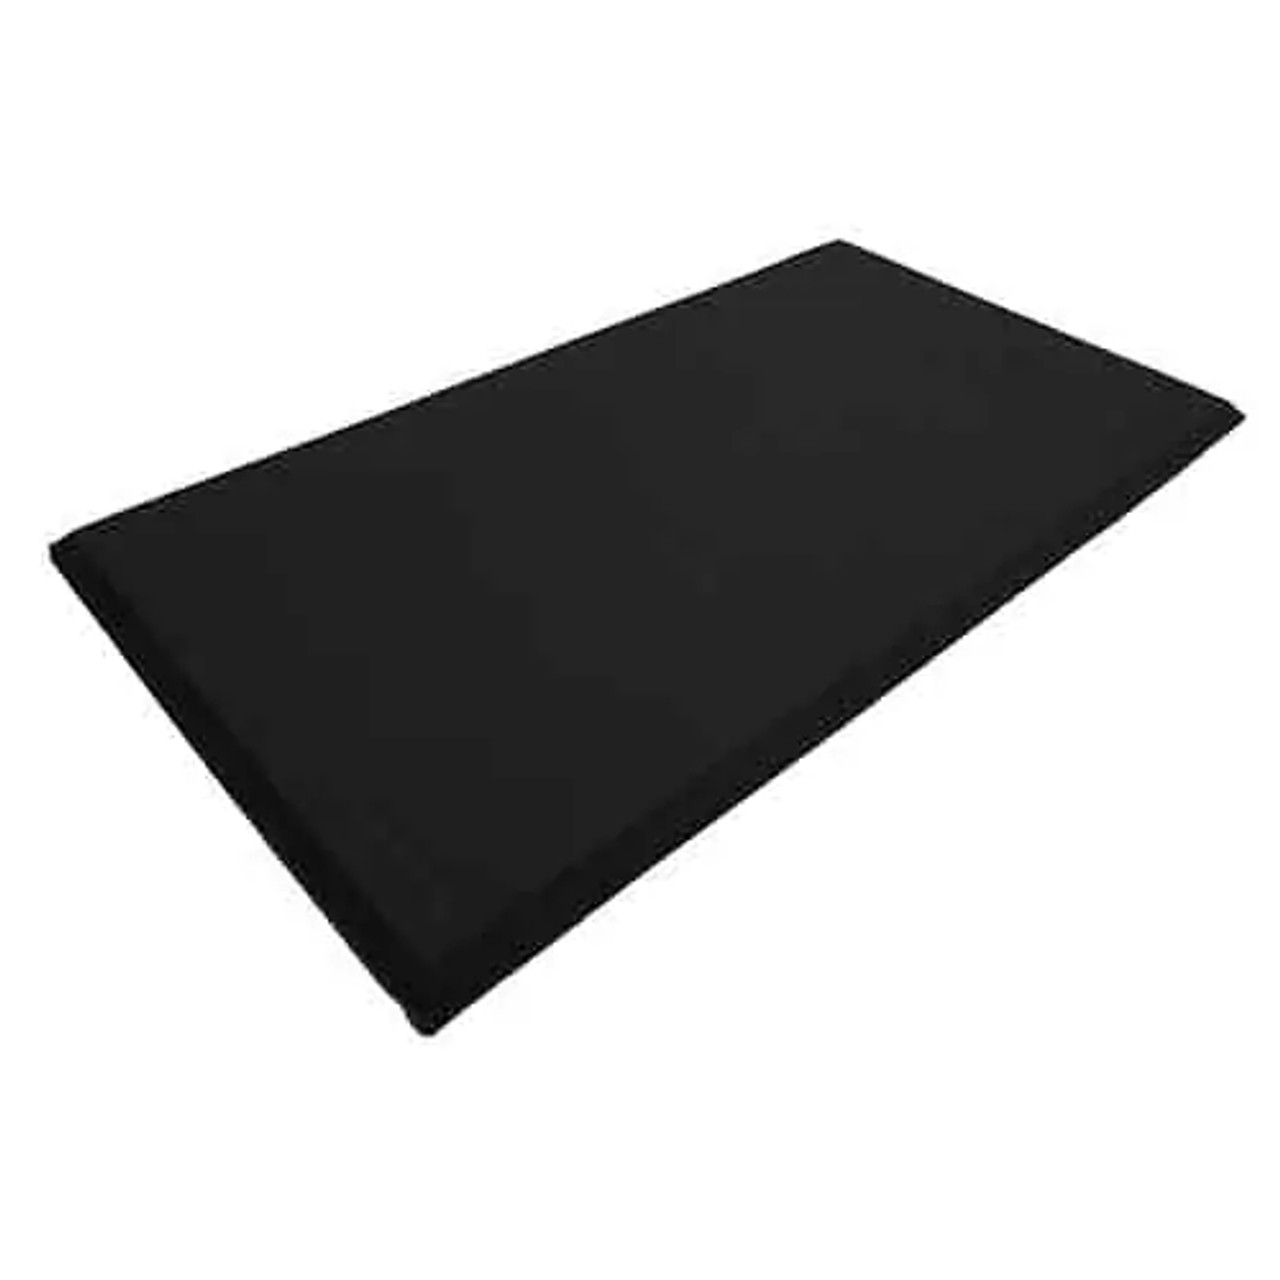 Let's Gel Eco-Pro Continuous Comfort Anti-Fatigue Black Floor Mats